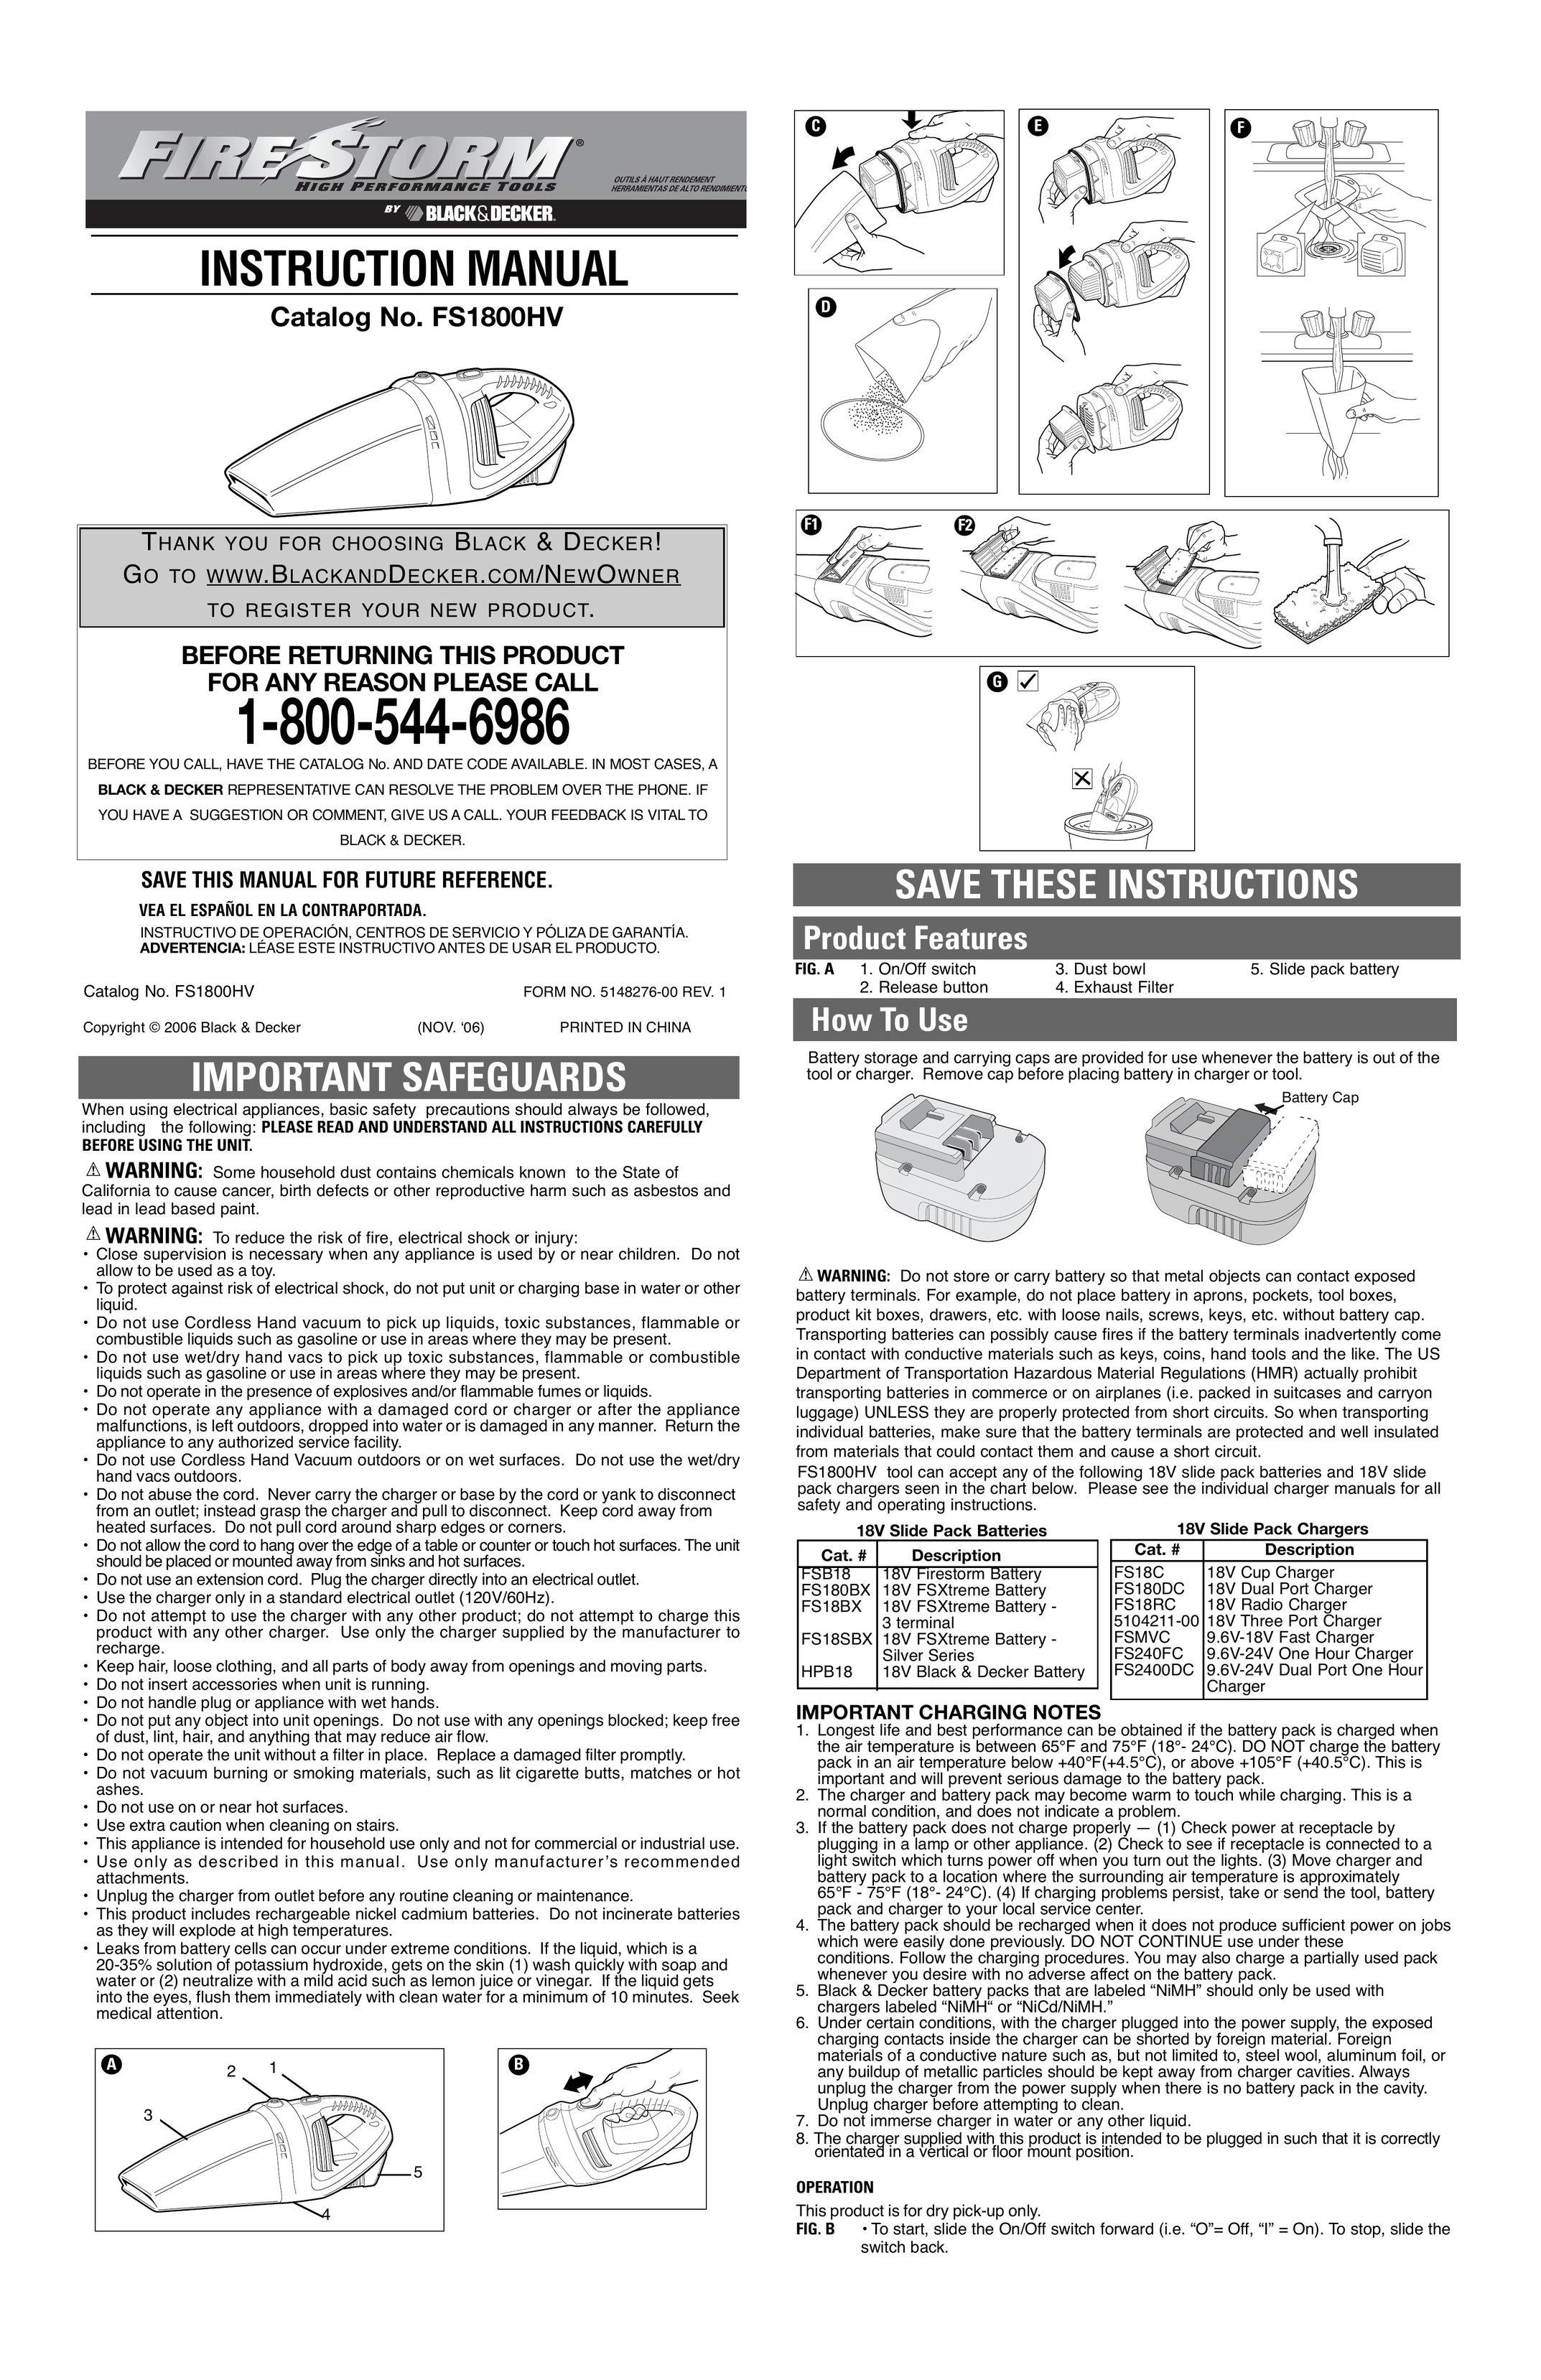 Black & Decker 5148276-00 Vacuum Cleaner User Manual